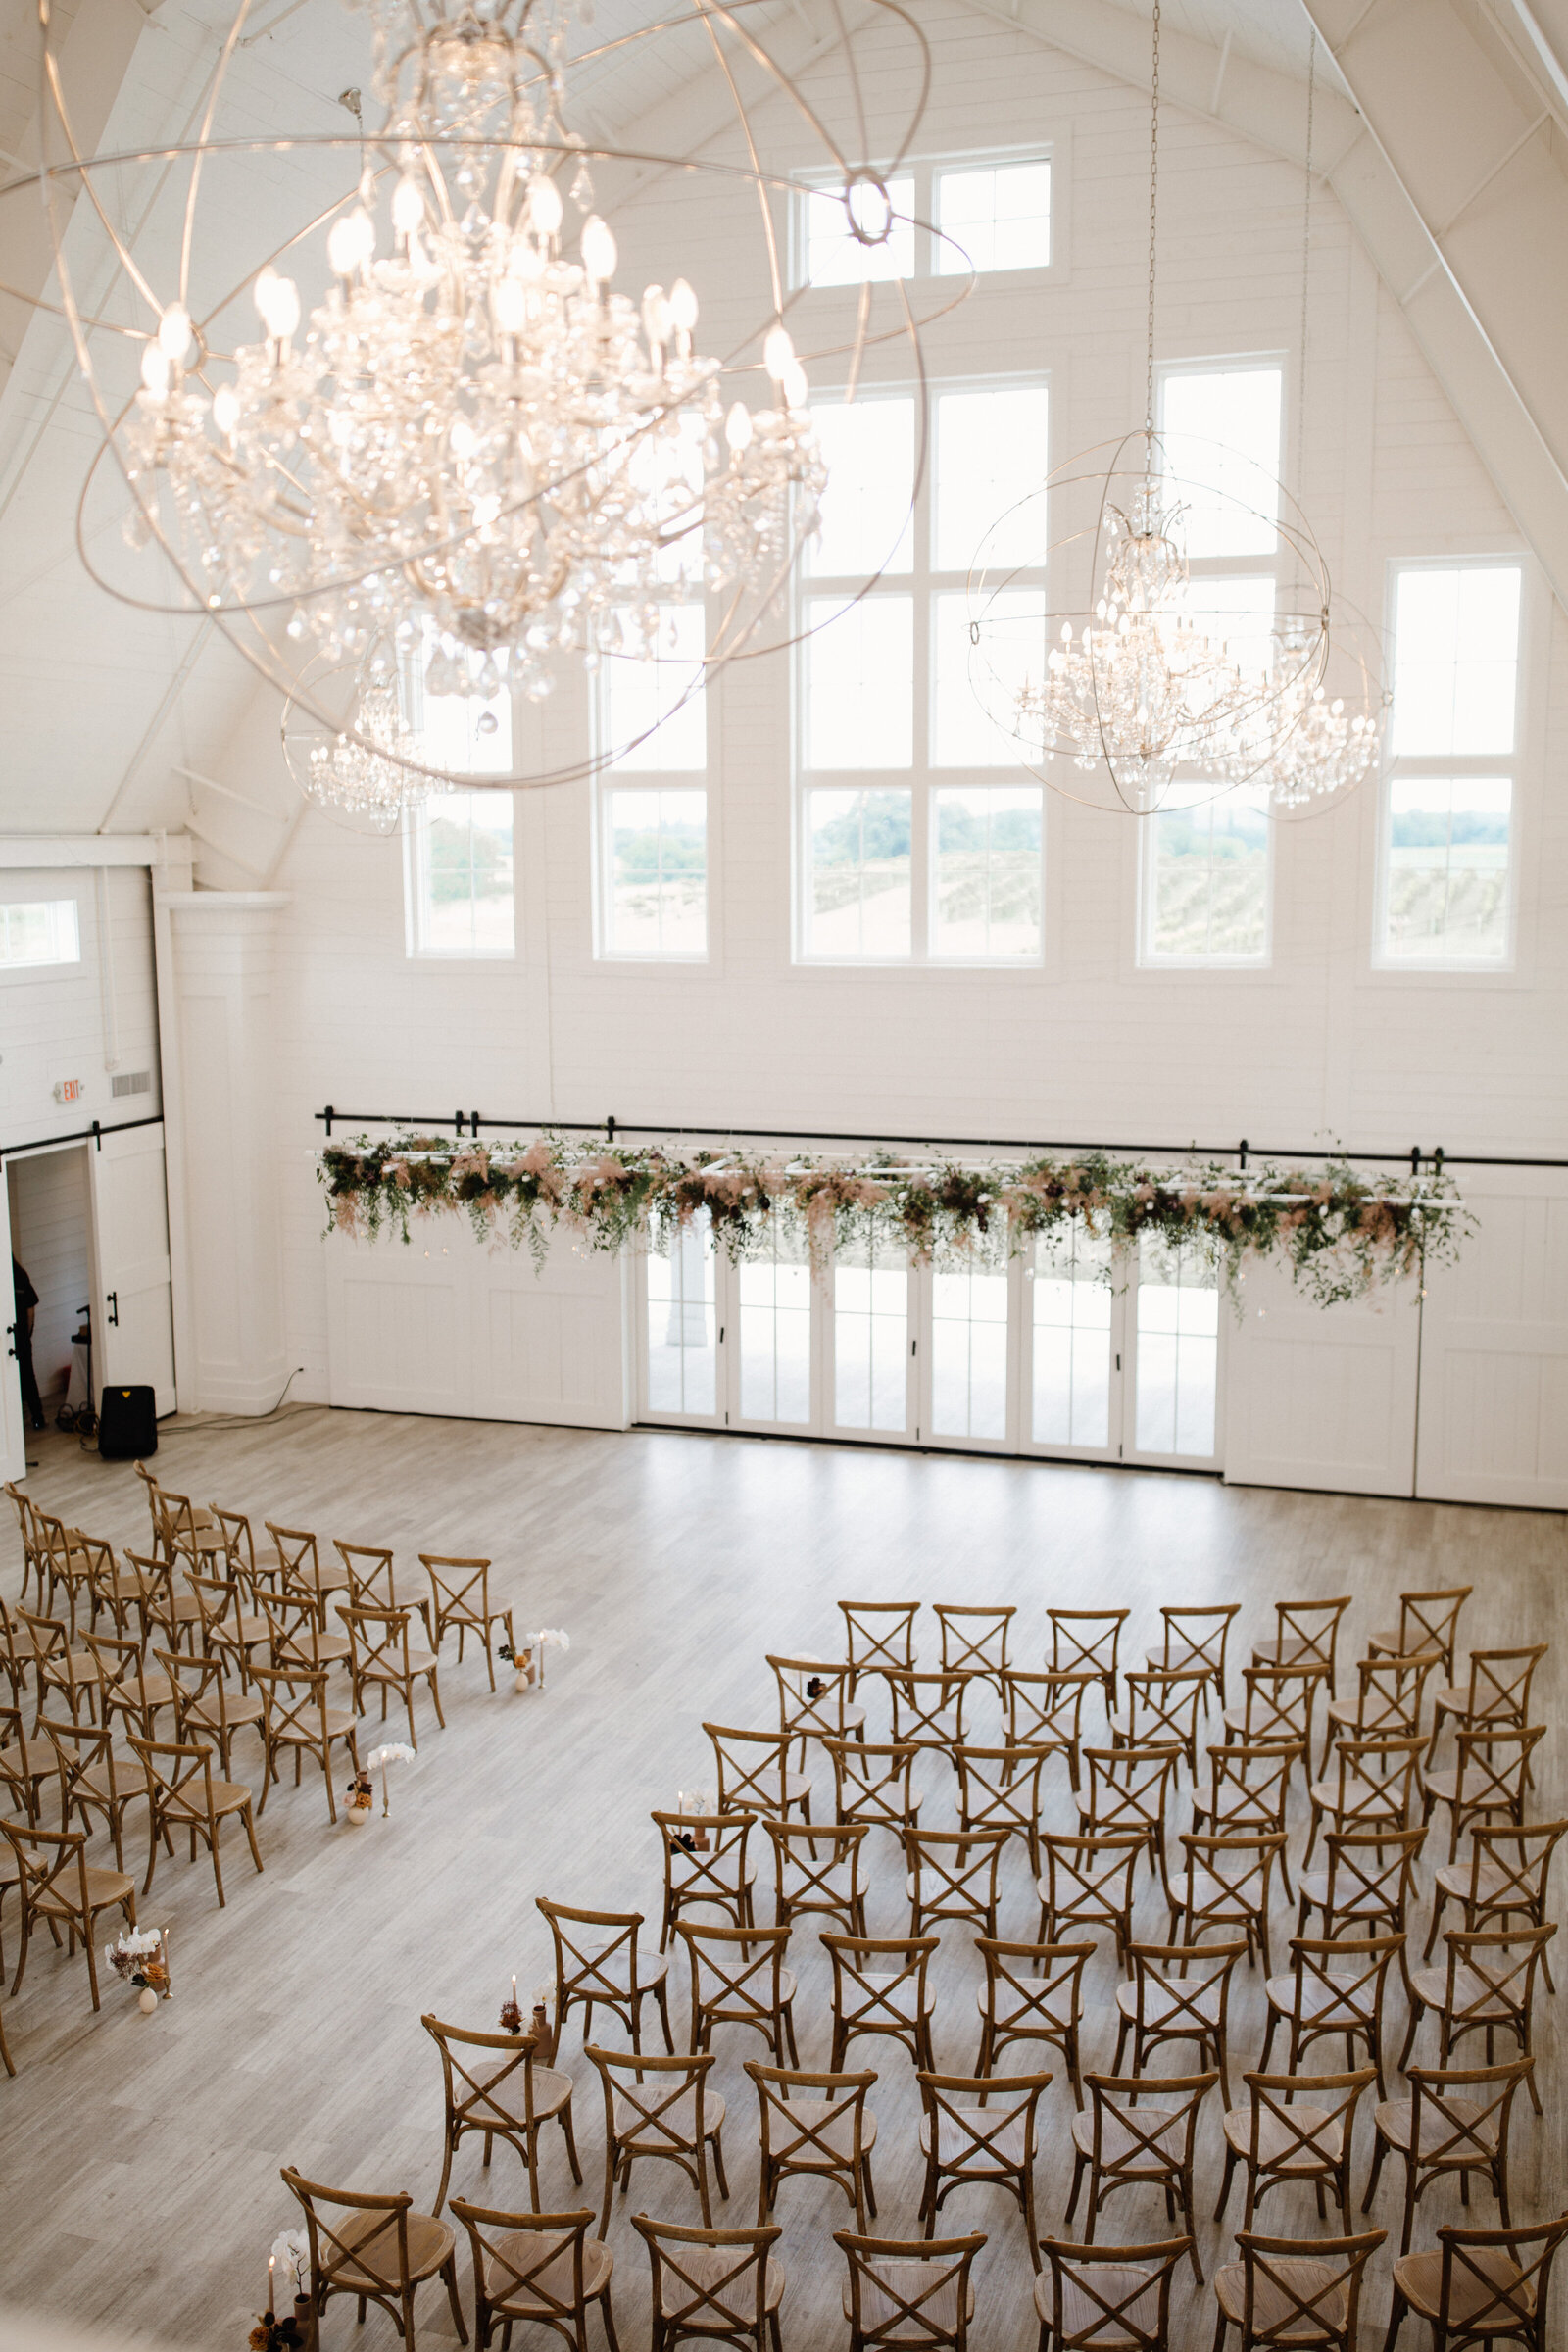 White barn wedding venue set up for a wedding ceremony